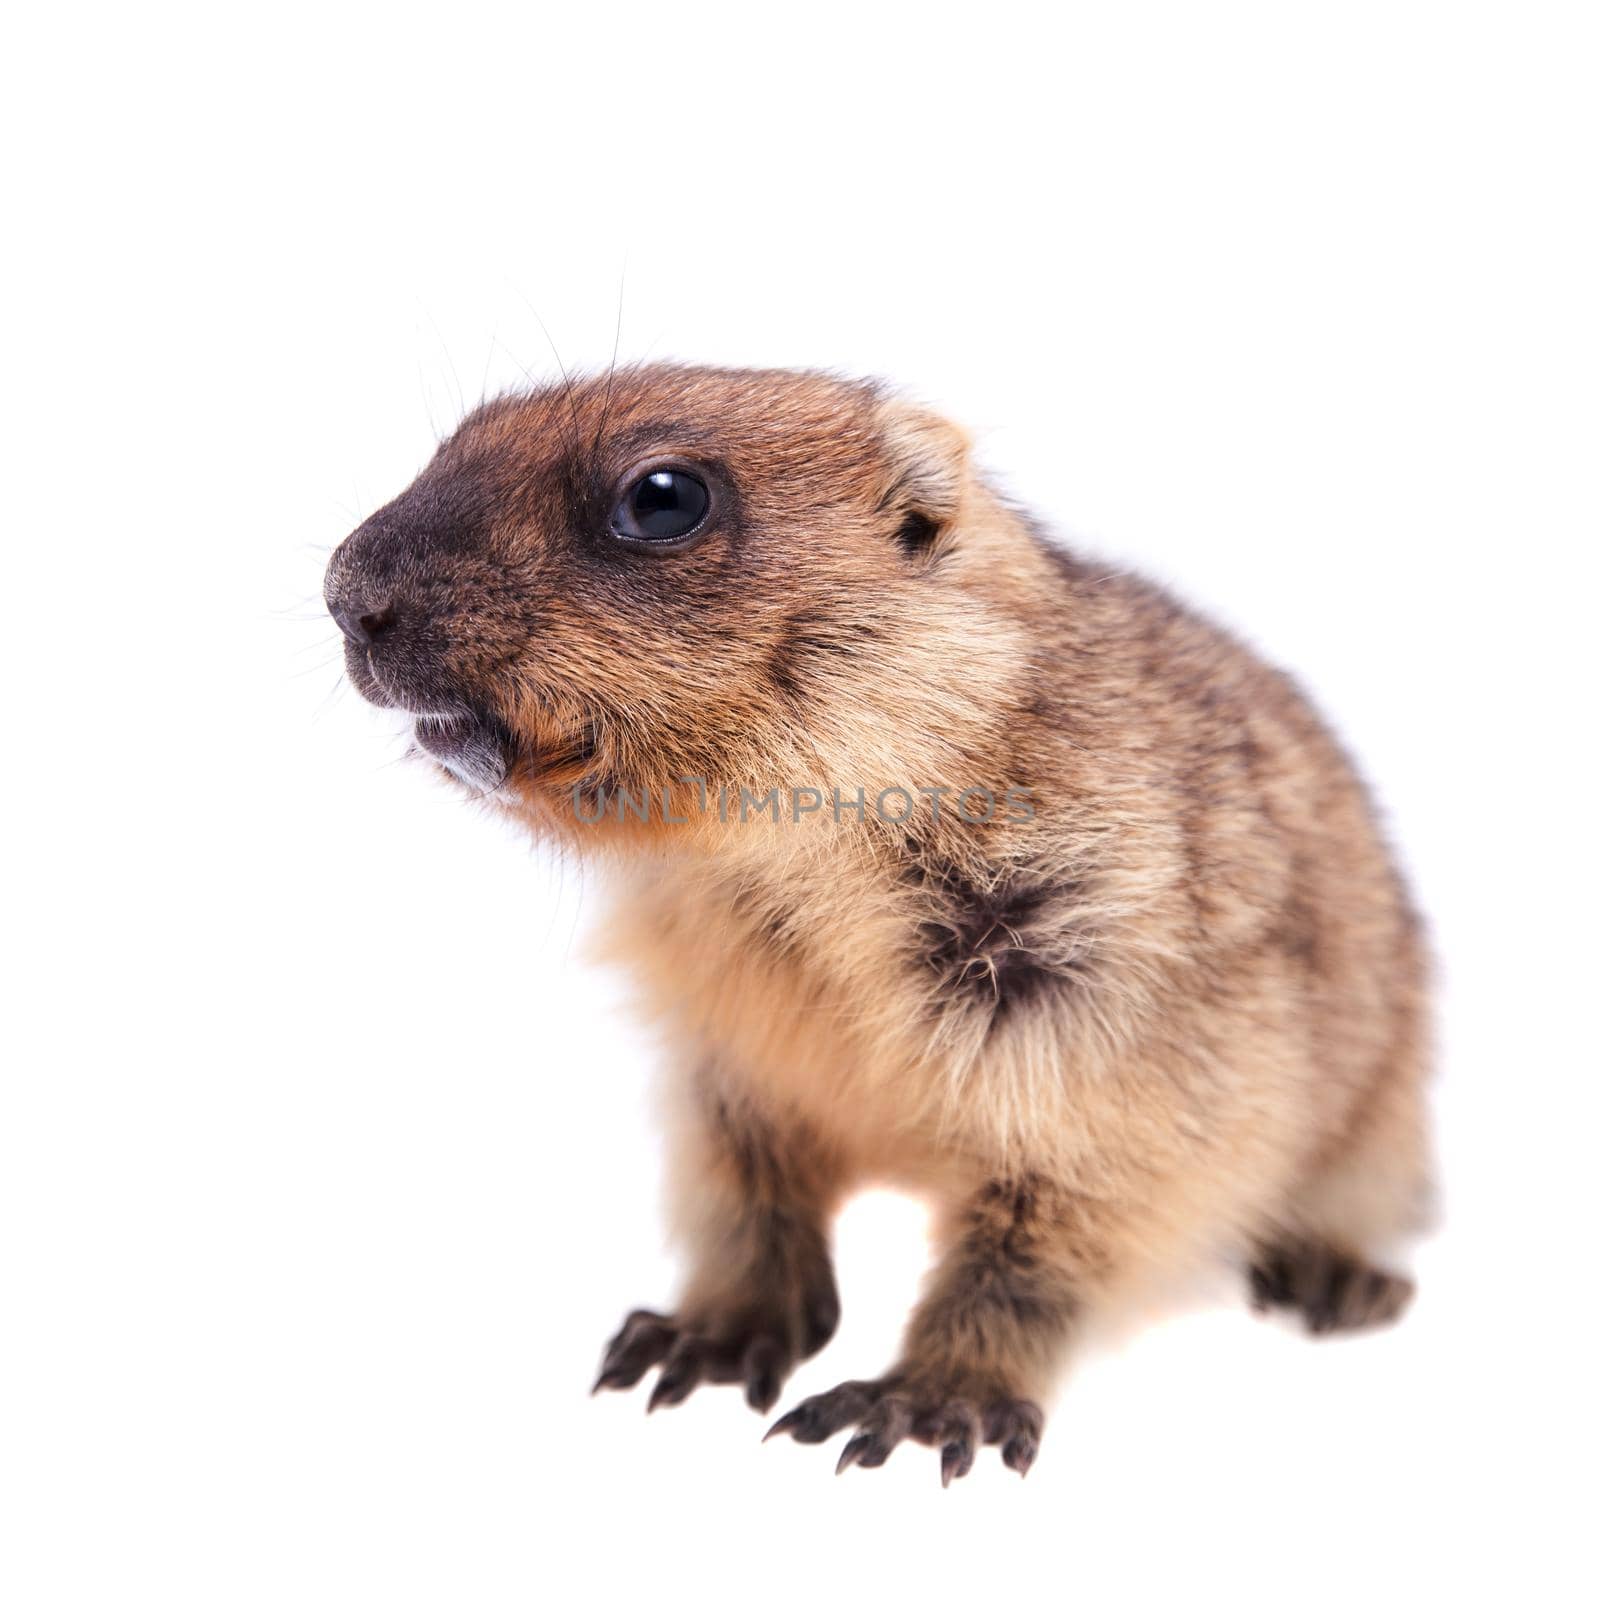 The bobak marmot cub isolated on white, Marmota bobak, or steppe marmot